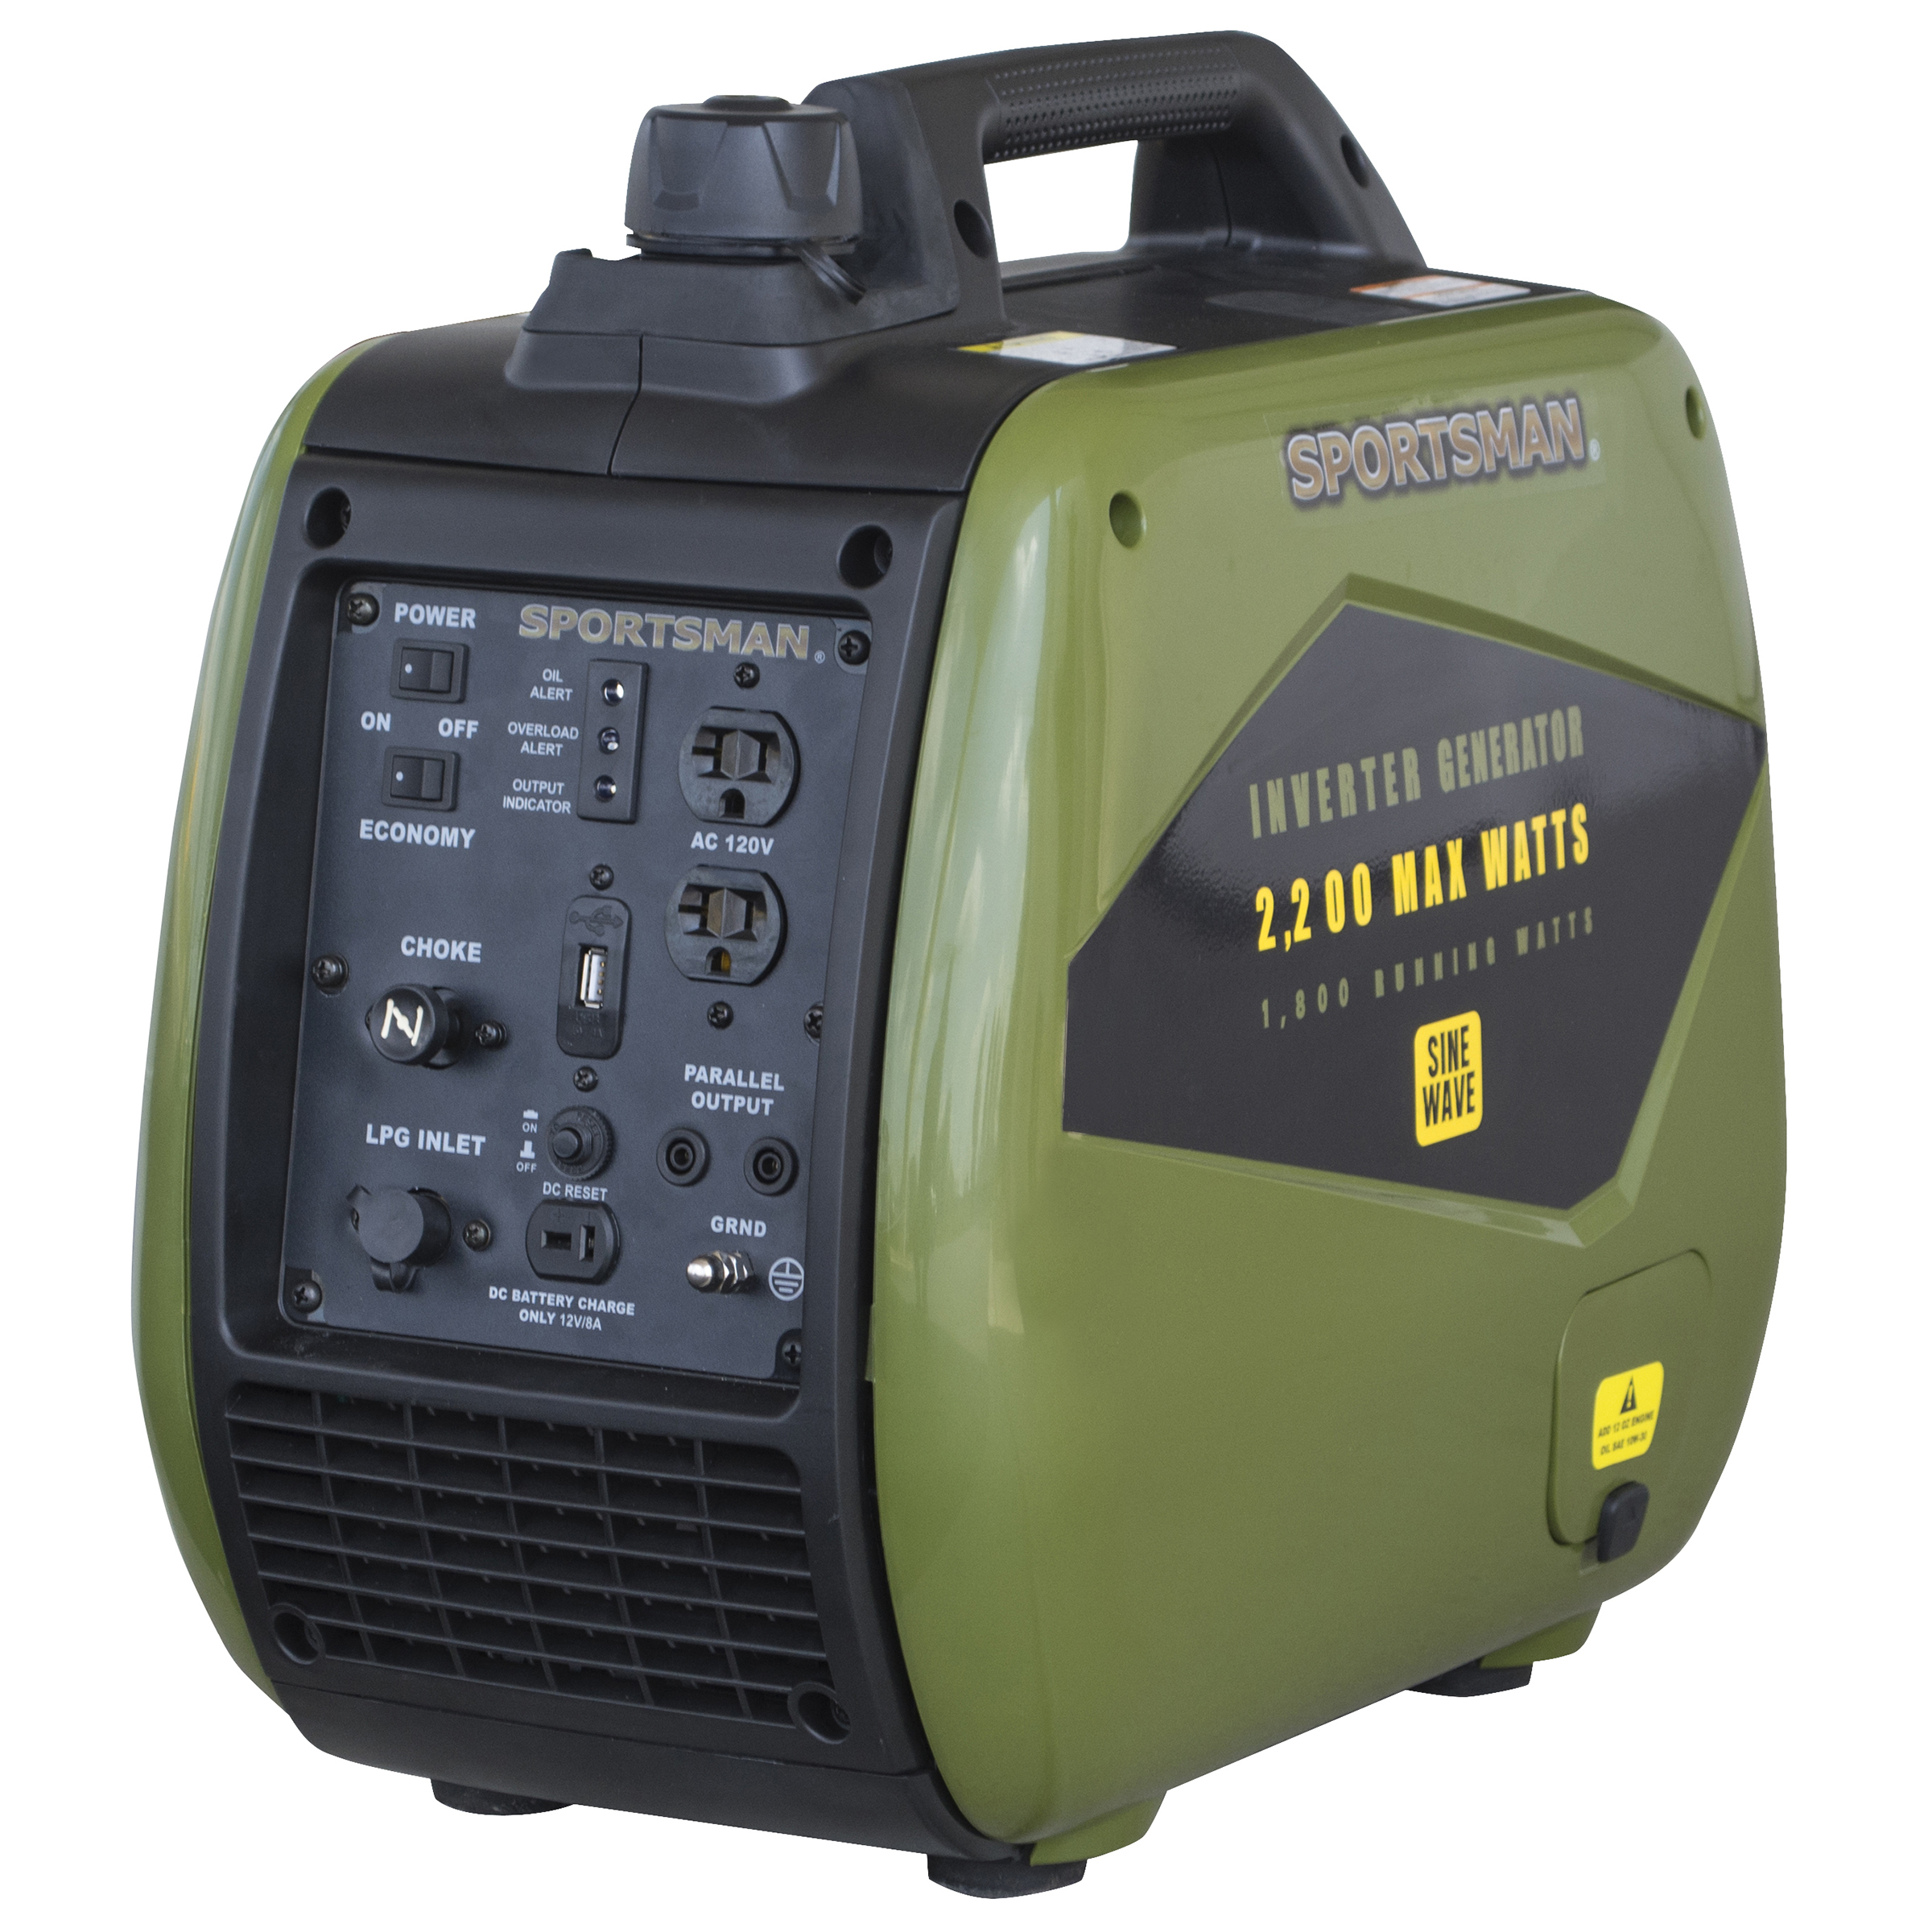 Sportsman 2200 Watt Dual Fuel Inverter Generator for Sensitive Electronics - image 2 of 9